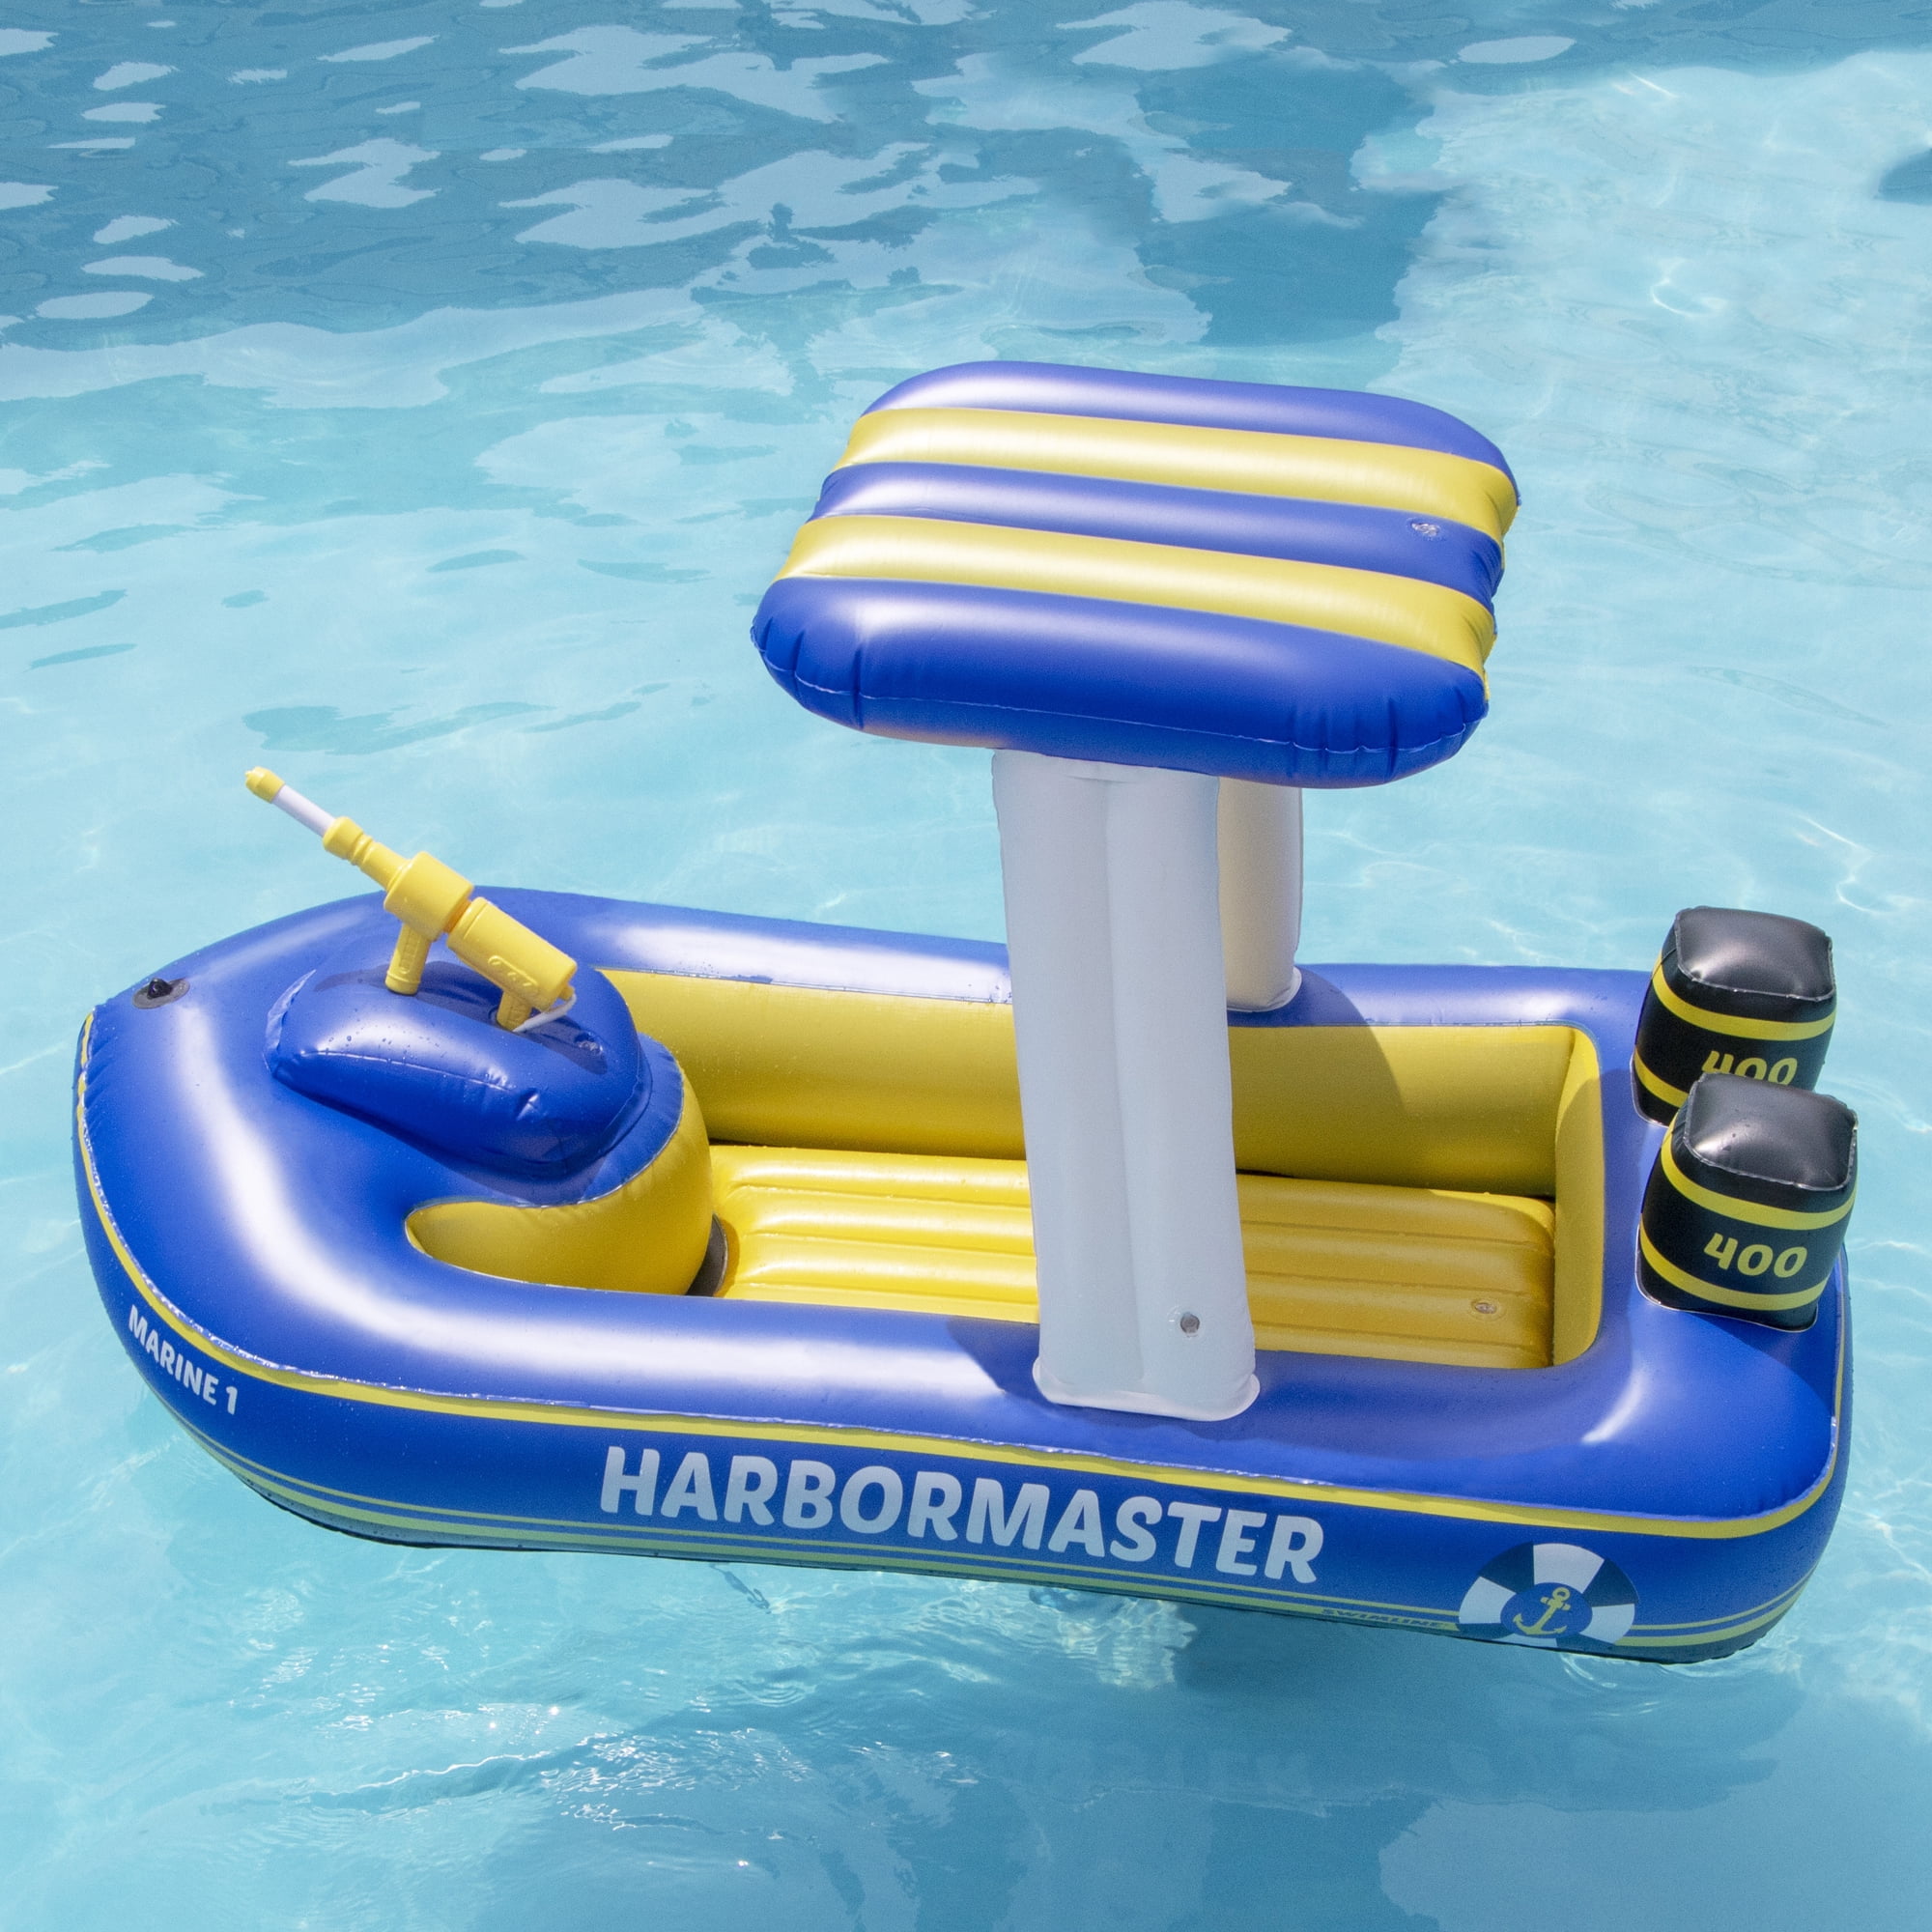 SWIMLINE ORIGINAL Harbor Master Inflatable Patrol Boat Pool Float